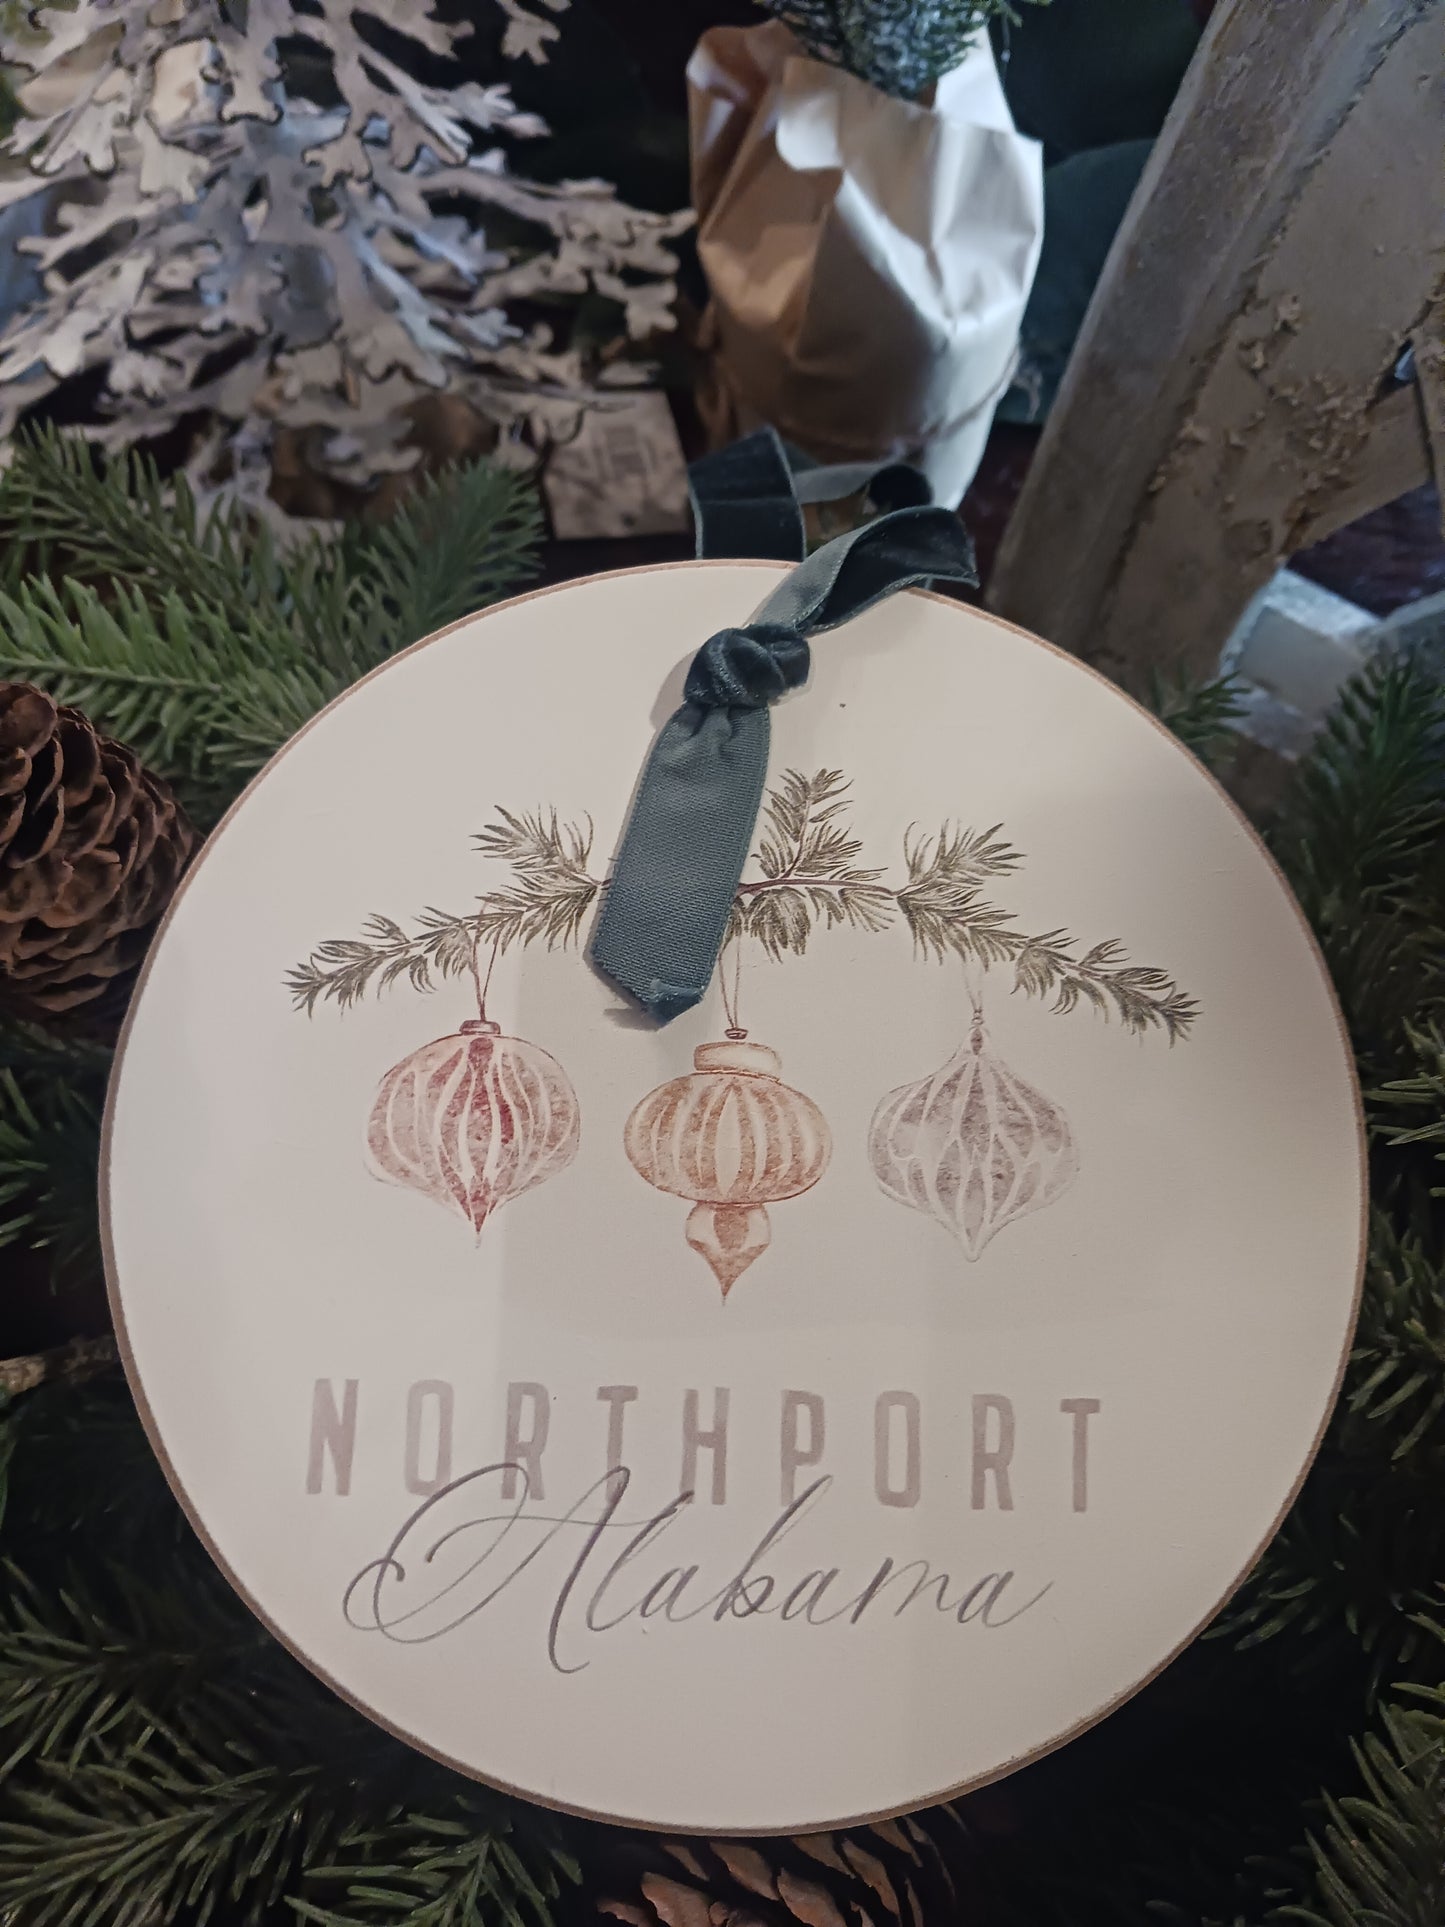 Ball Northport ornament